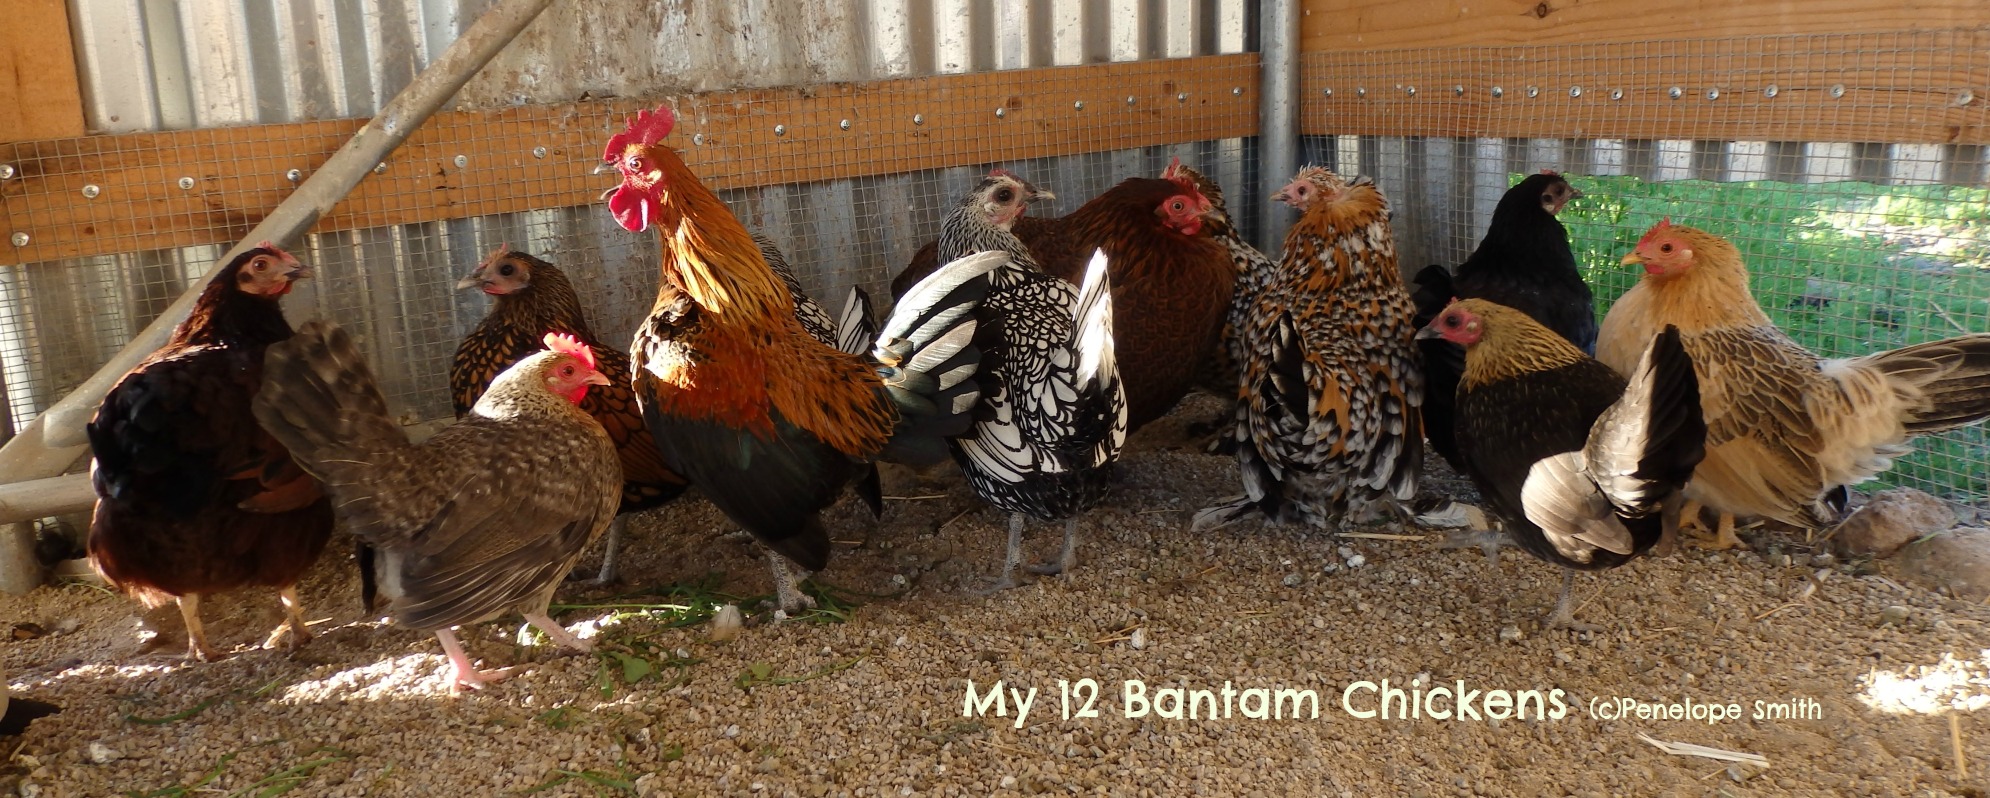 12 Bantam Chickens